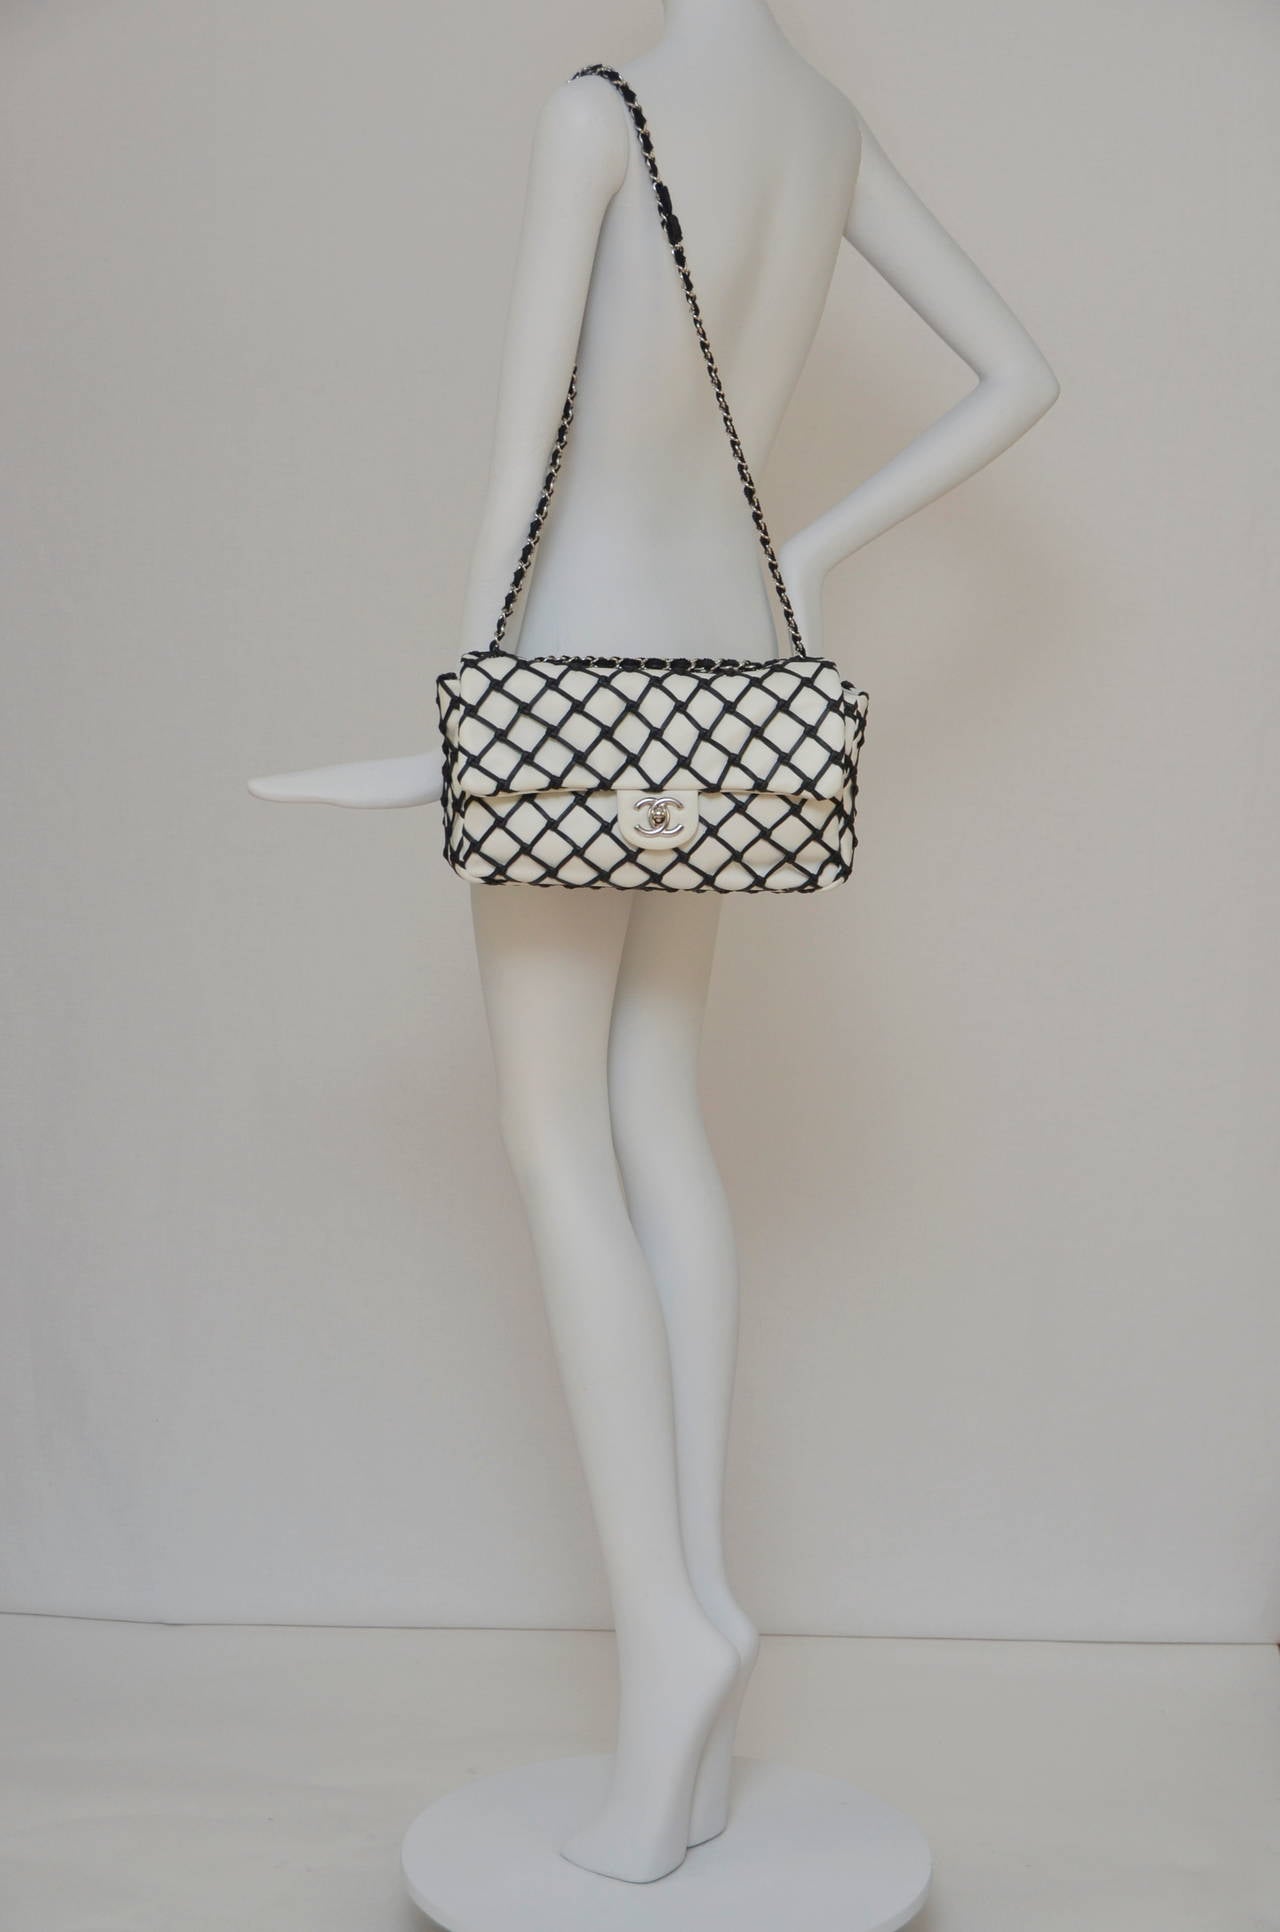 Chanel Jumbo  Flap White Lambskin Leather Handbag With Black Leather Net NEW 1